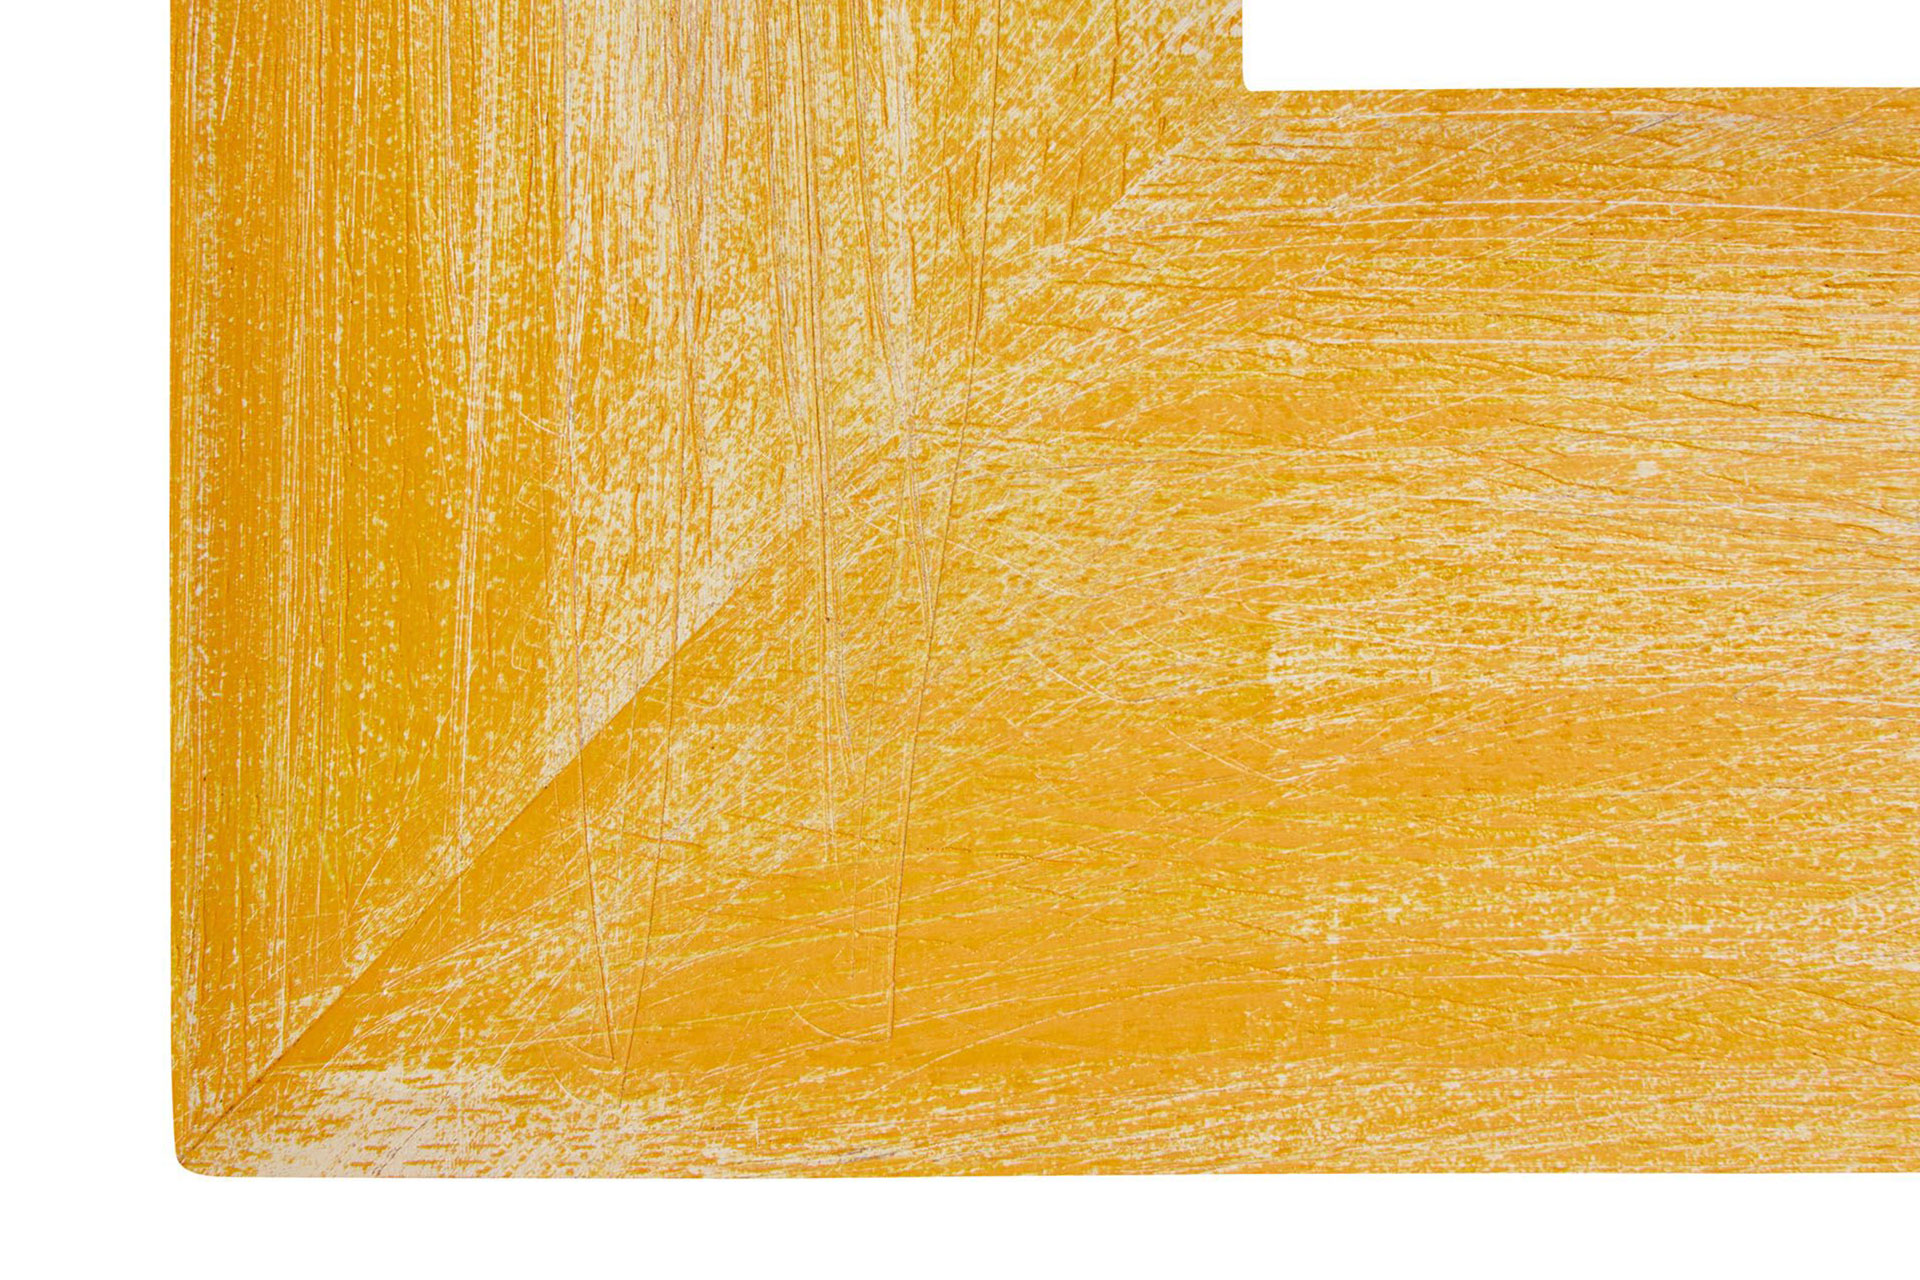 Modell Etta, rechteckig, Farbe: gelb, modern, Herstellung: ASR-Rahmendesign Material: Holz, Spiegel Facette, Ansicht Ecke